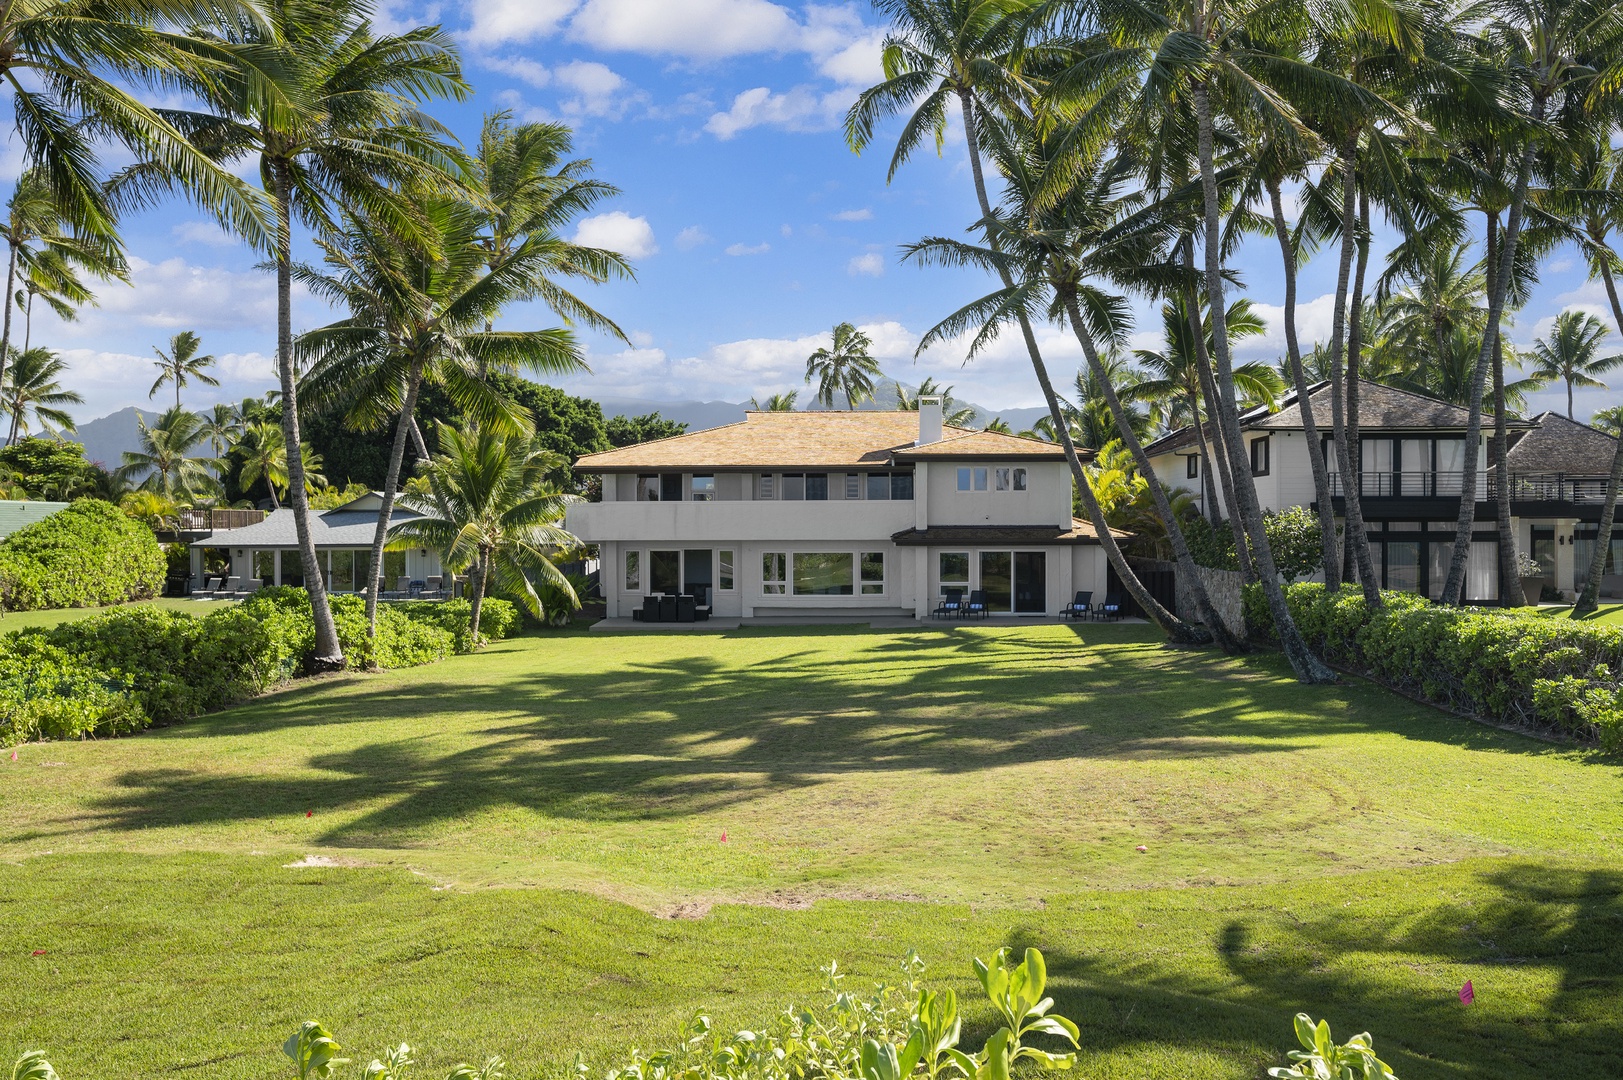 Kailua Vacation Rentals, Kailua Hale Kahakai - Exterior of home from the backyard